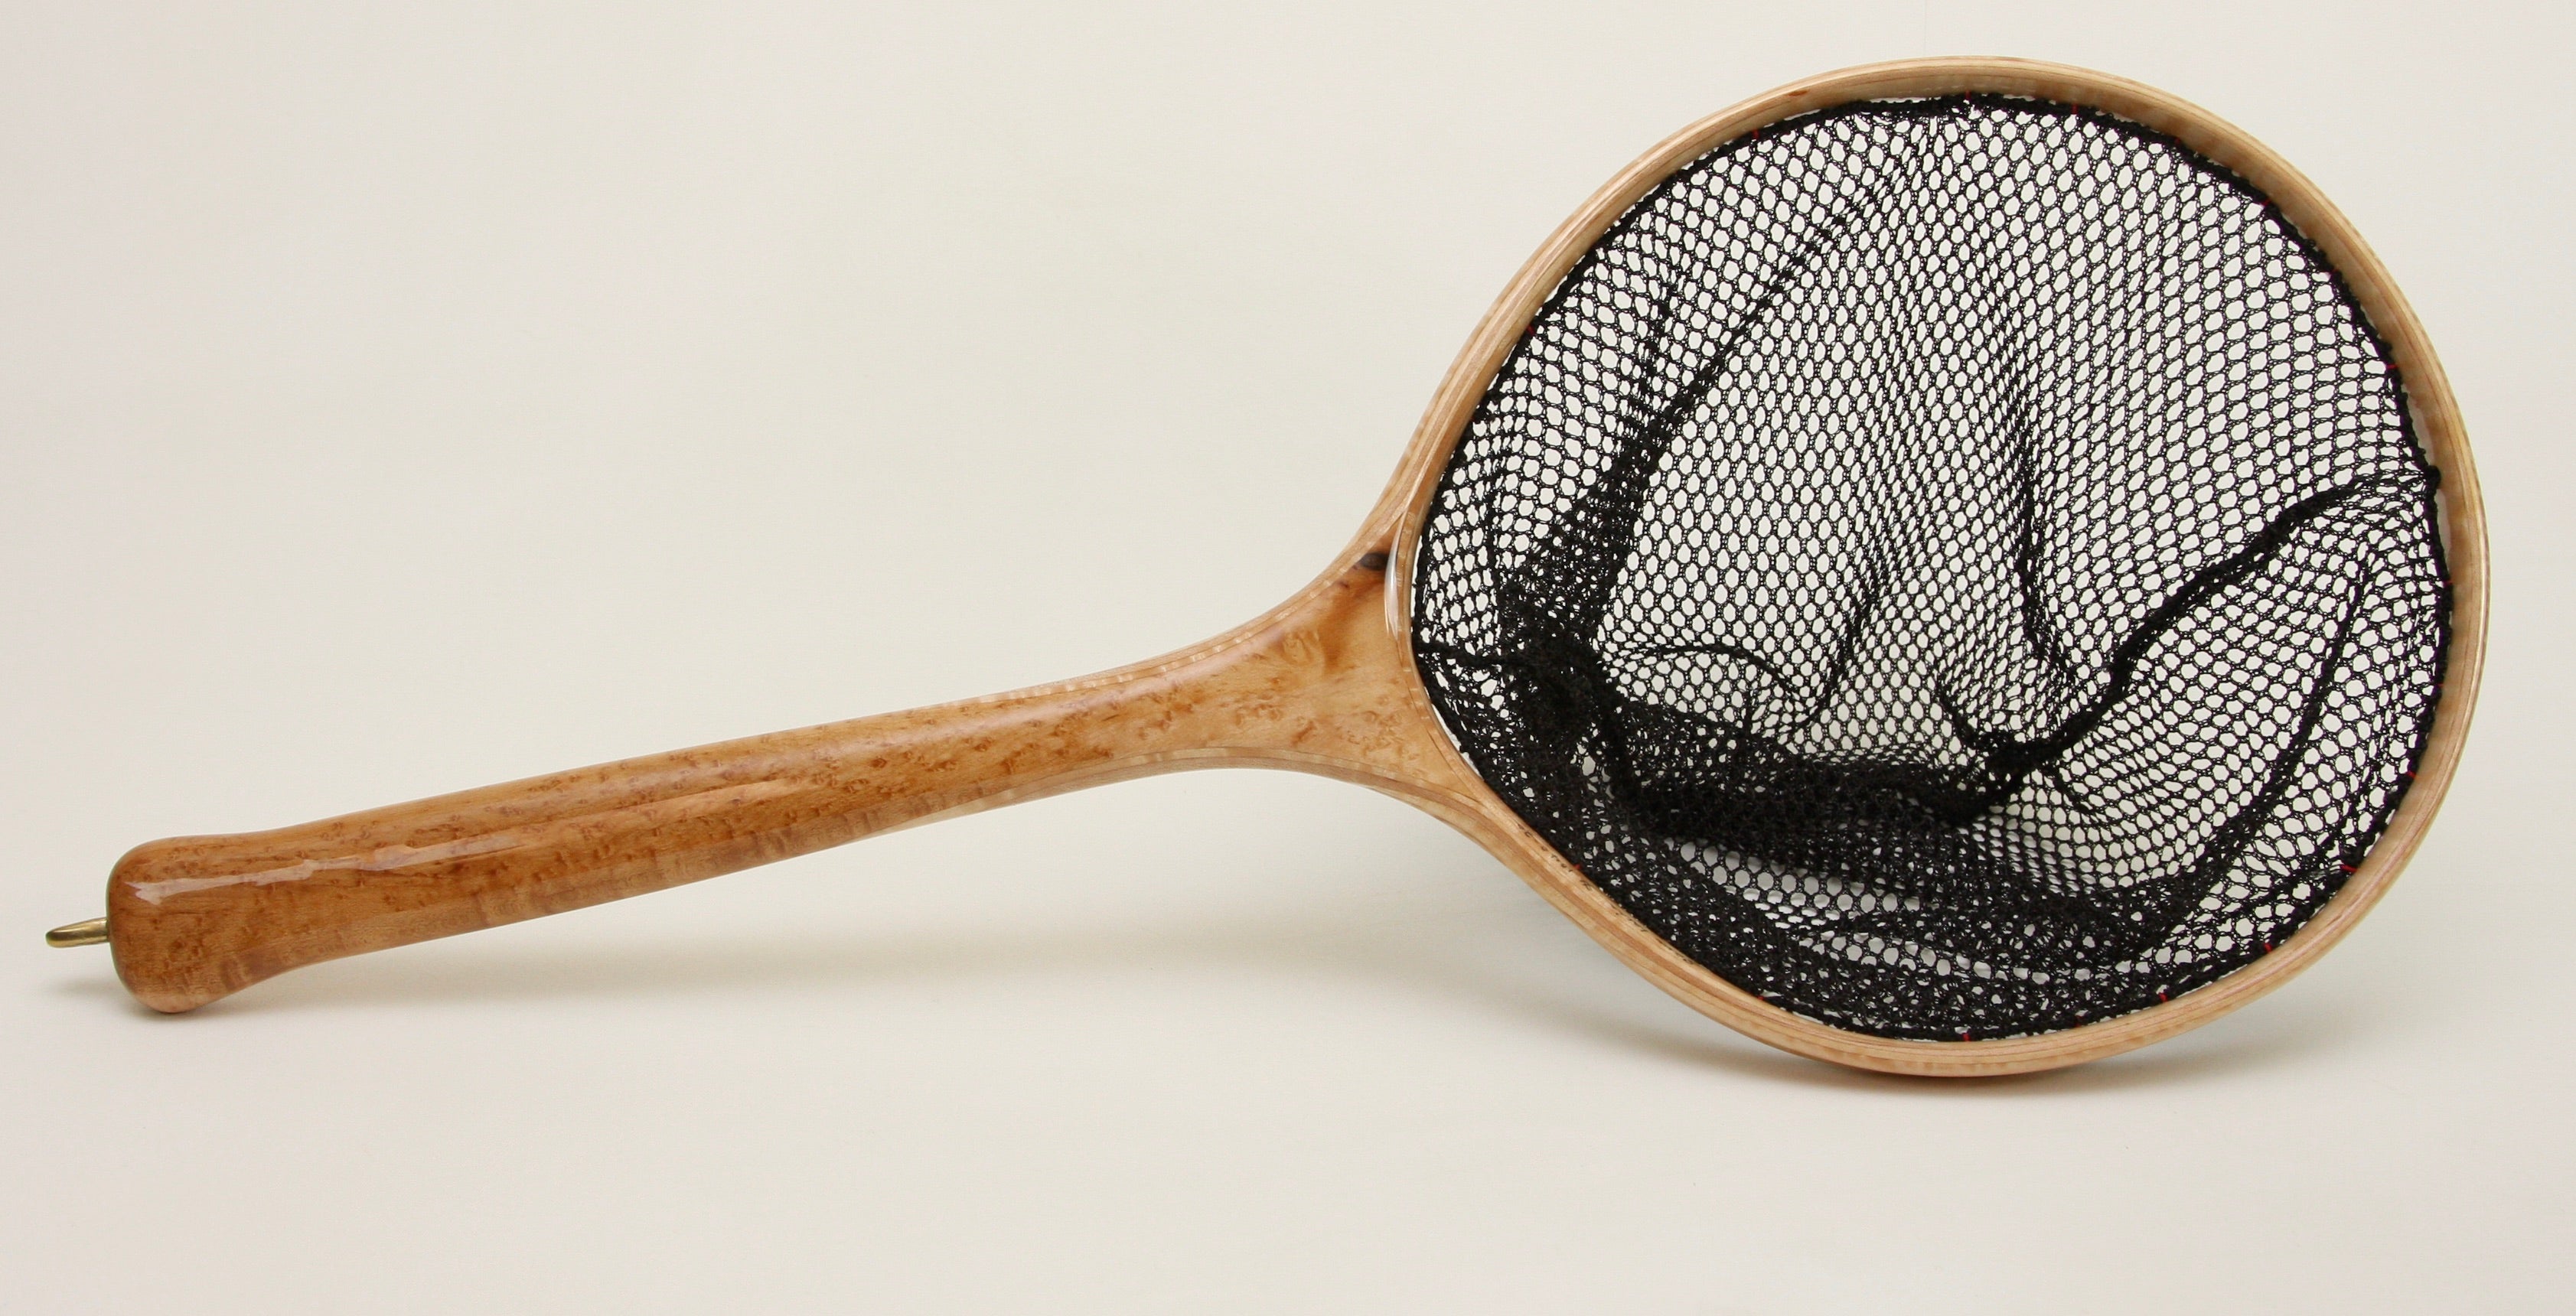 American Tenkara, A smaller wooden landing net for elegant fishing